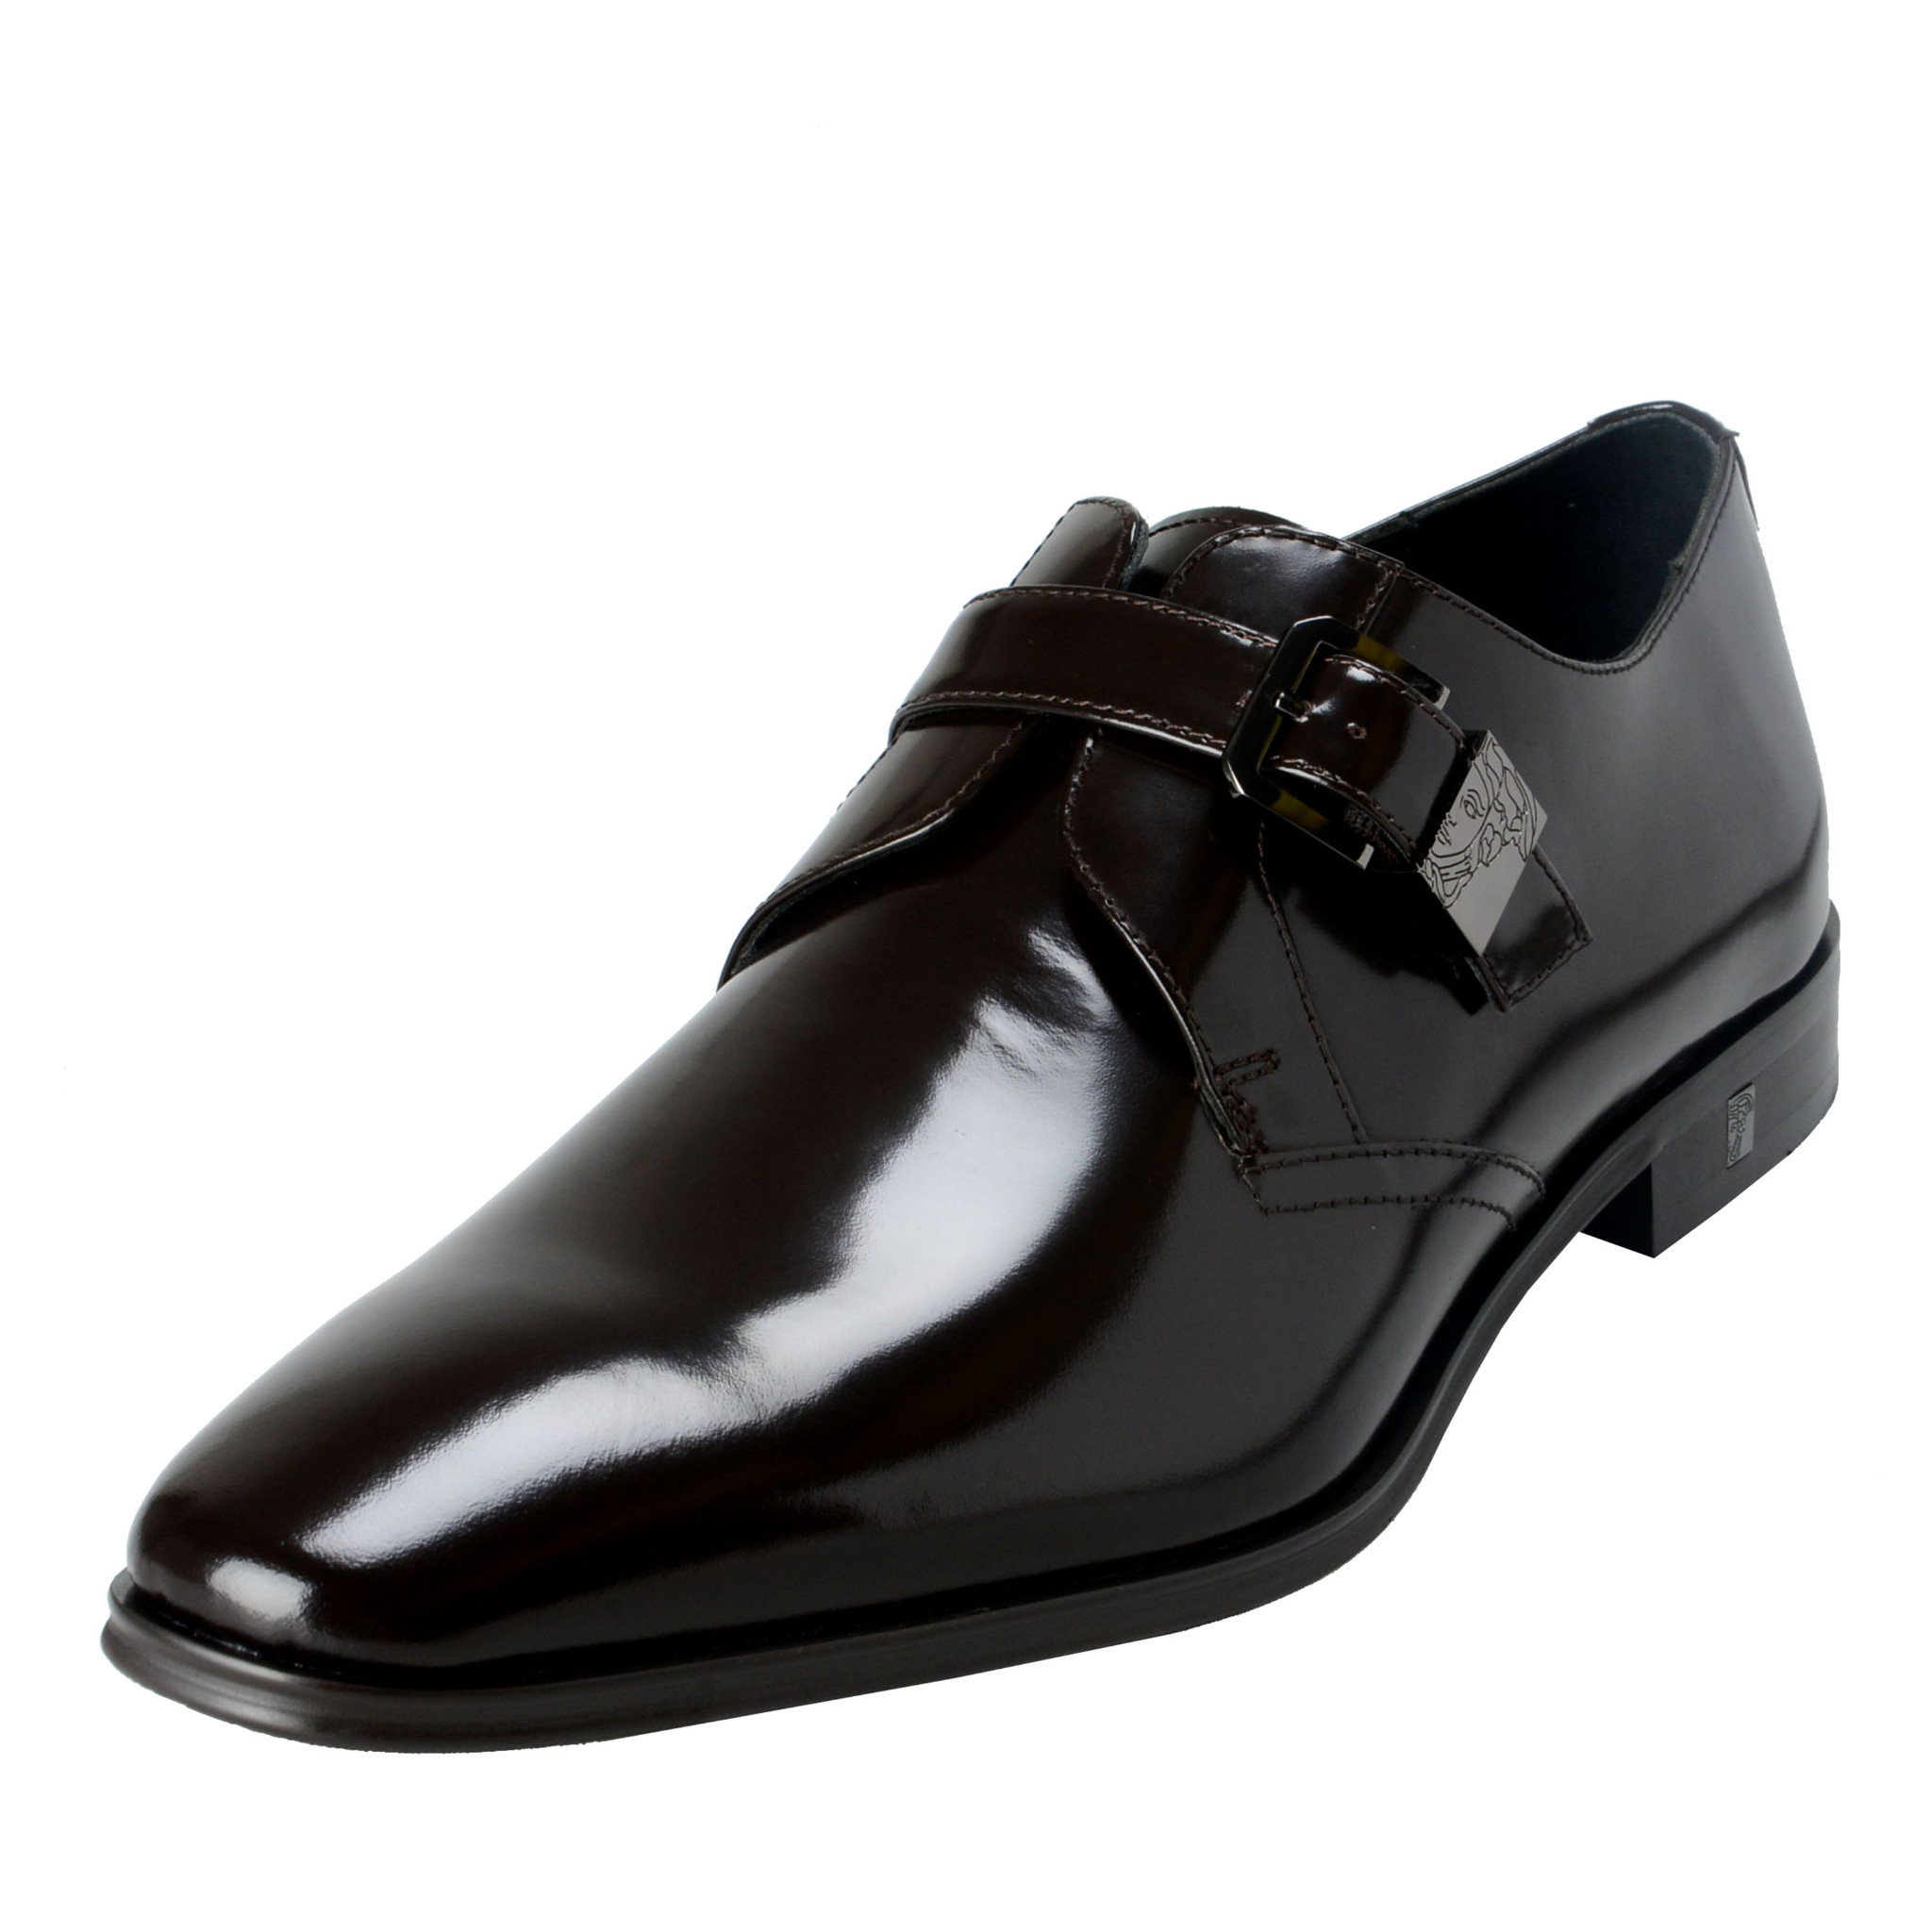 versace collection men's shoes